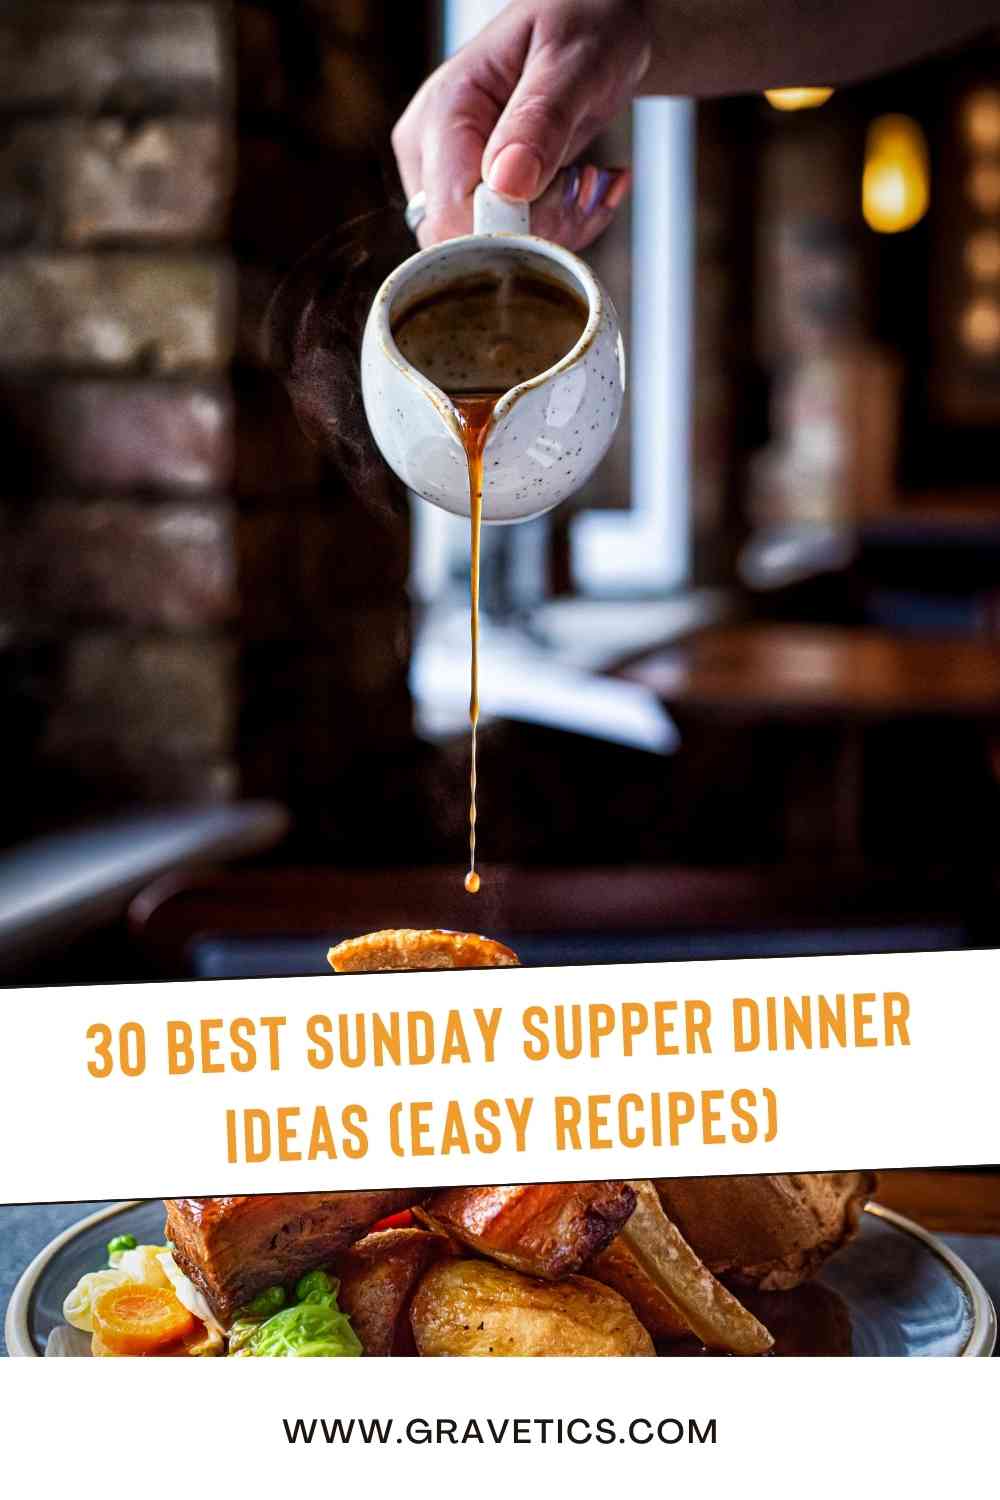 30 Best Sunday Supper Dinner Ideas (Easy Recipes)